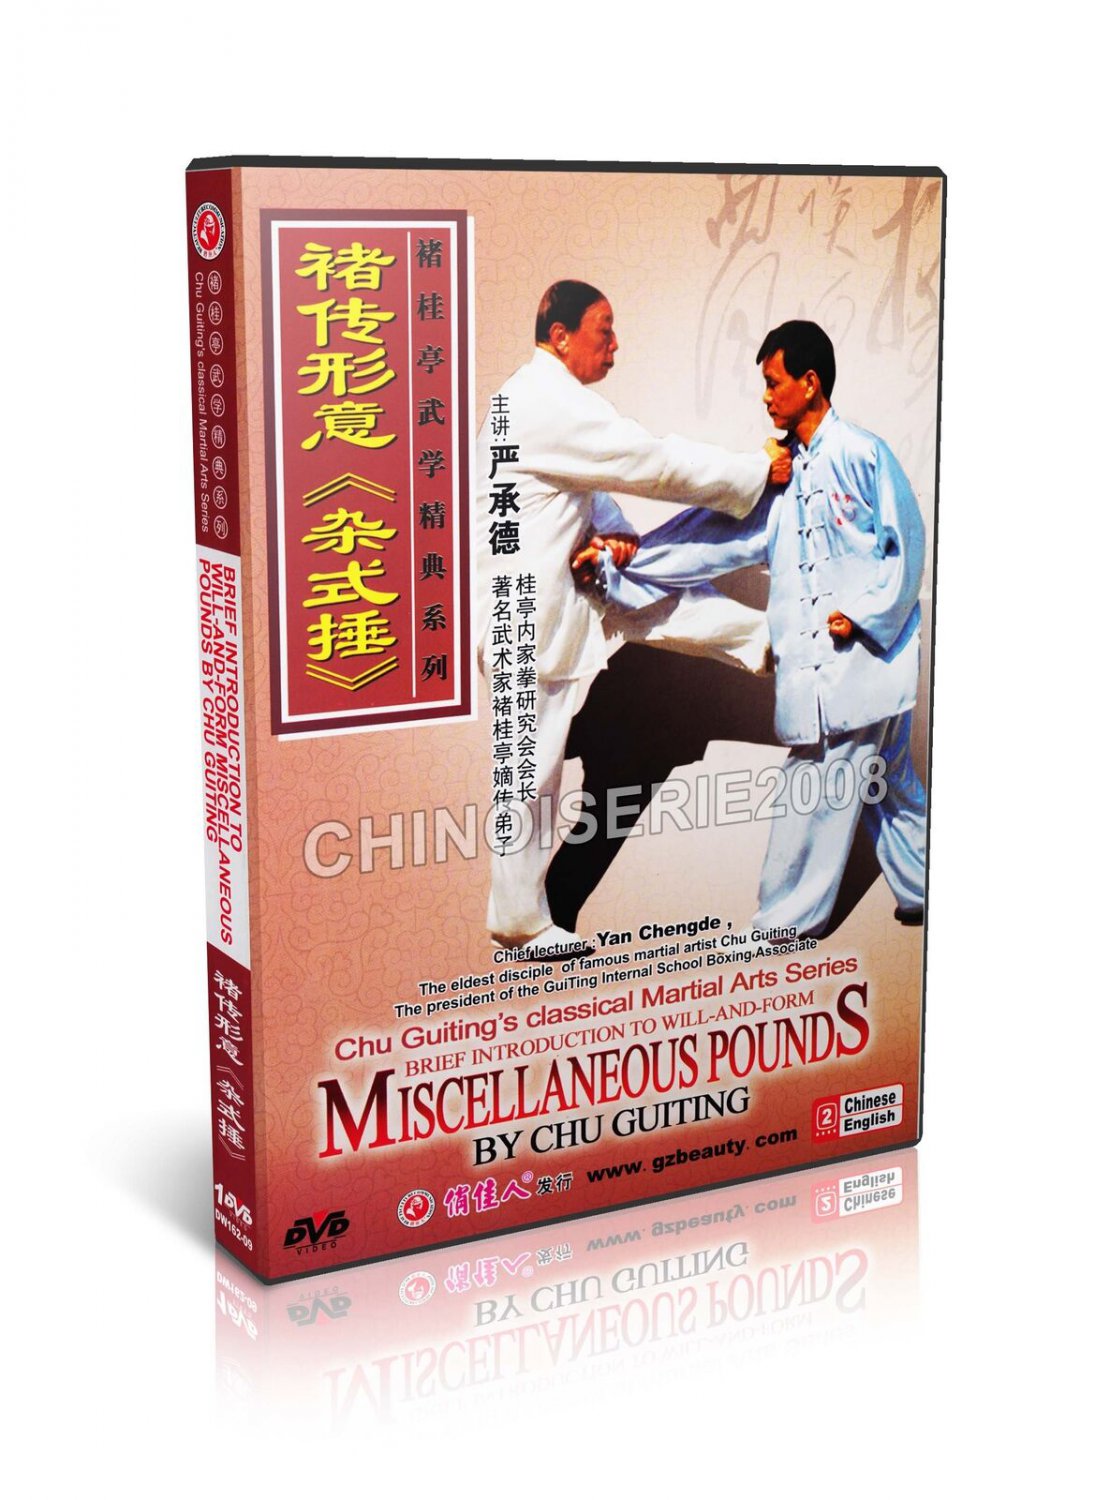 Classical Martial Arts - Hsing I xingyi Miscellaneous Pounds by Chu Guiting DVD